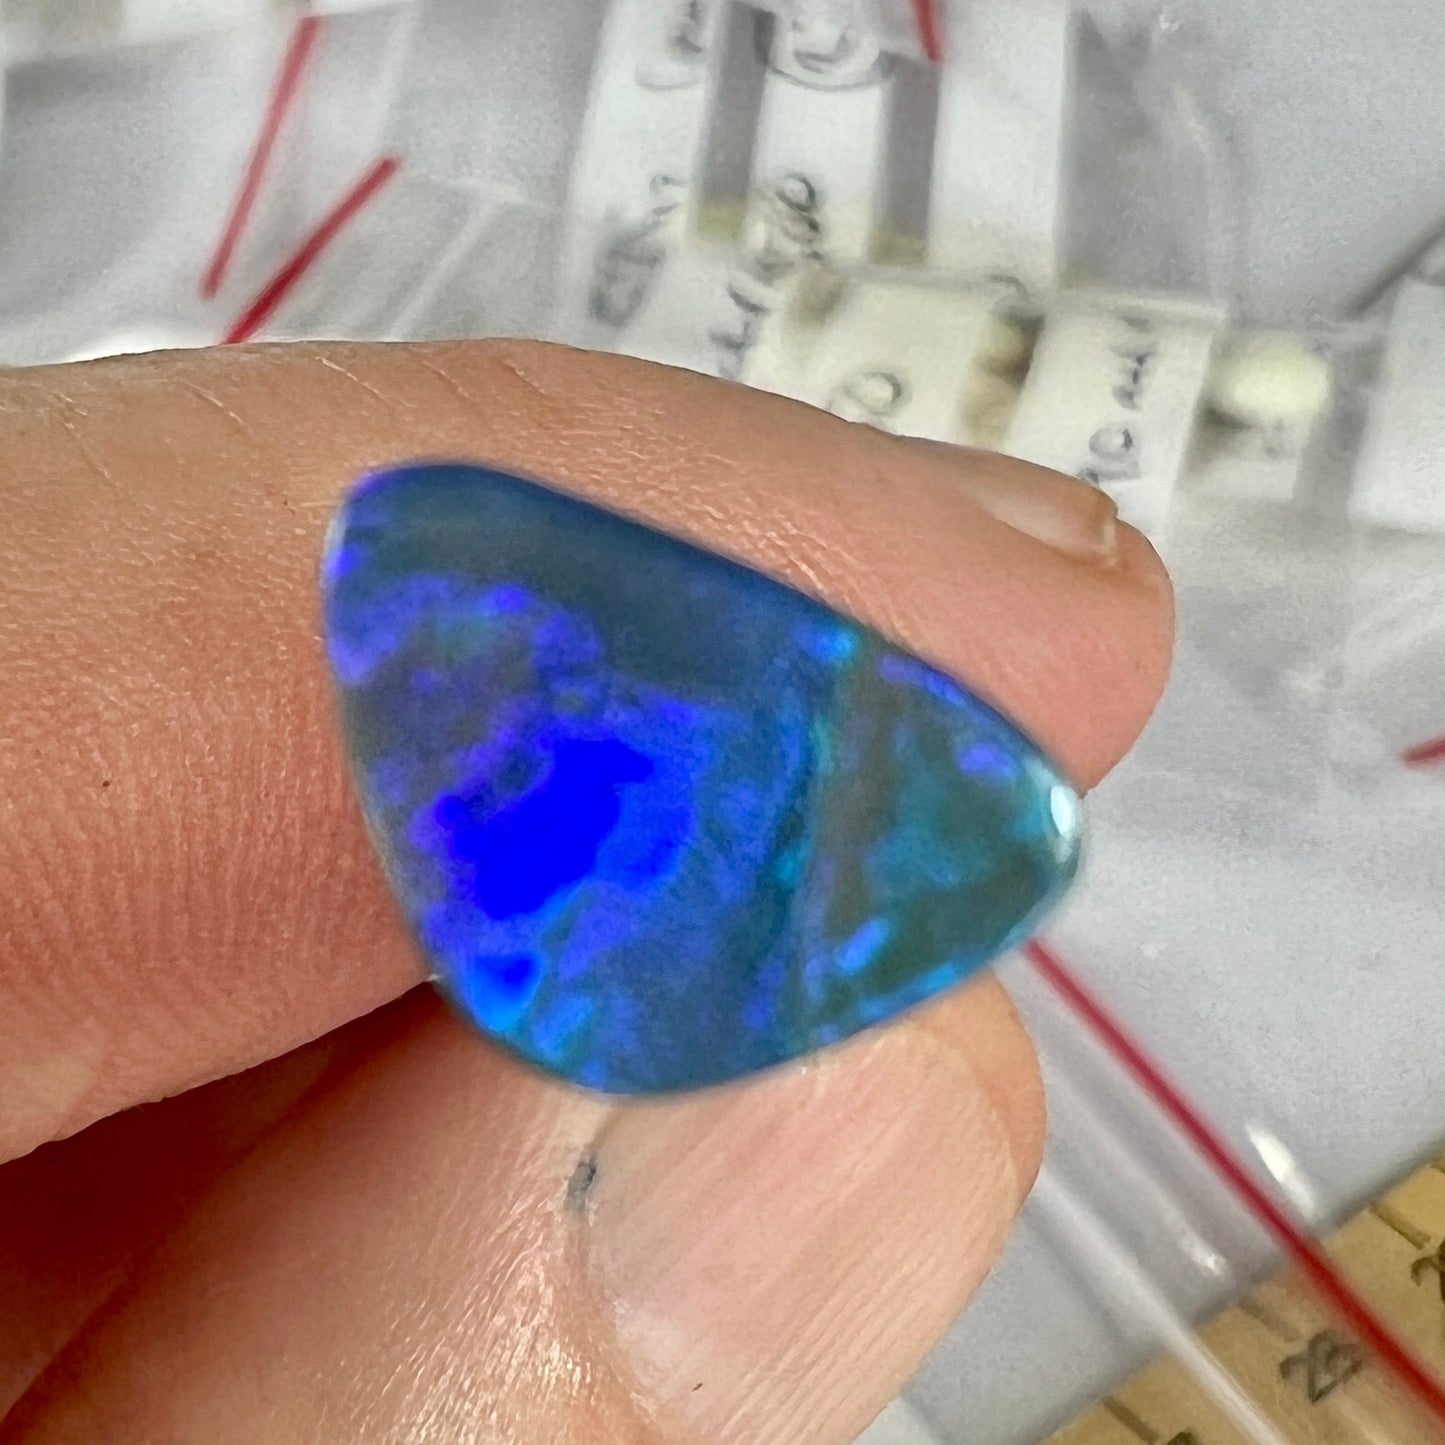 Solid blue/green Lightning Ridge opal. A nice little ring stone.